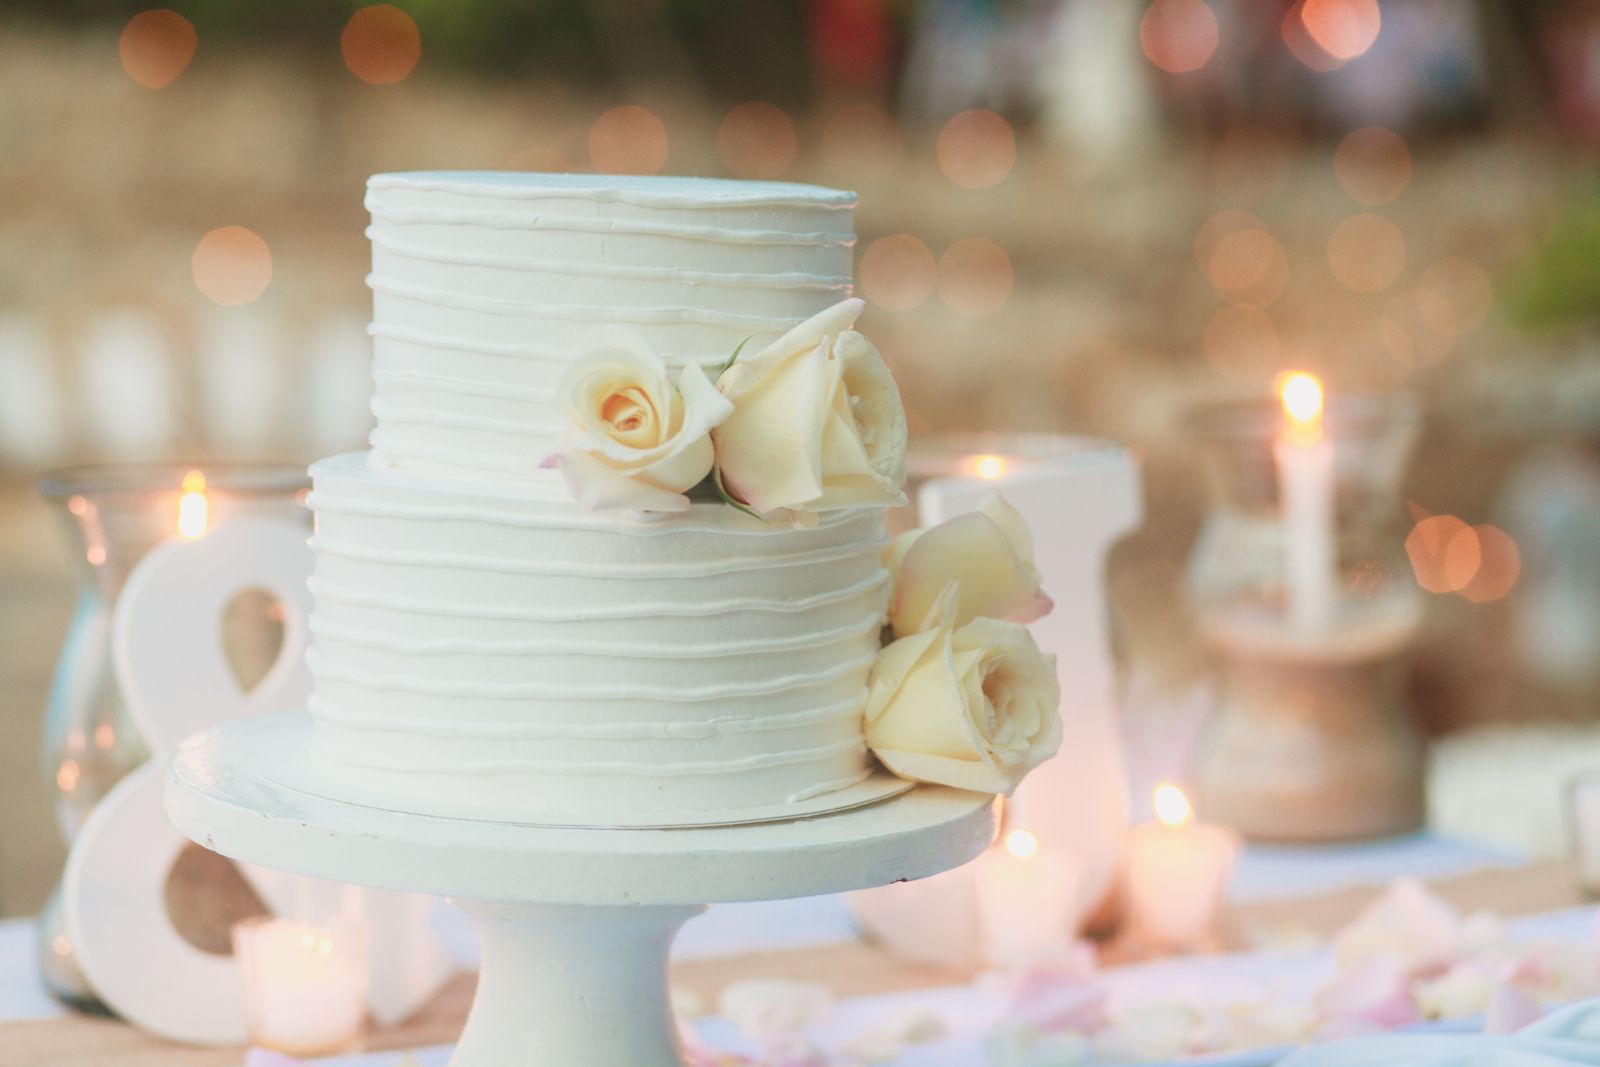 Wedding cakes- Inspiration,decorations,themes..